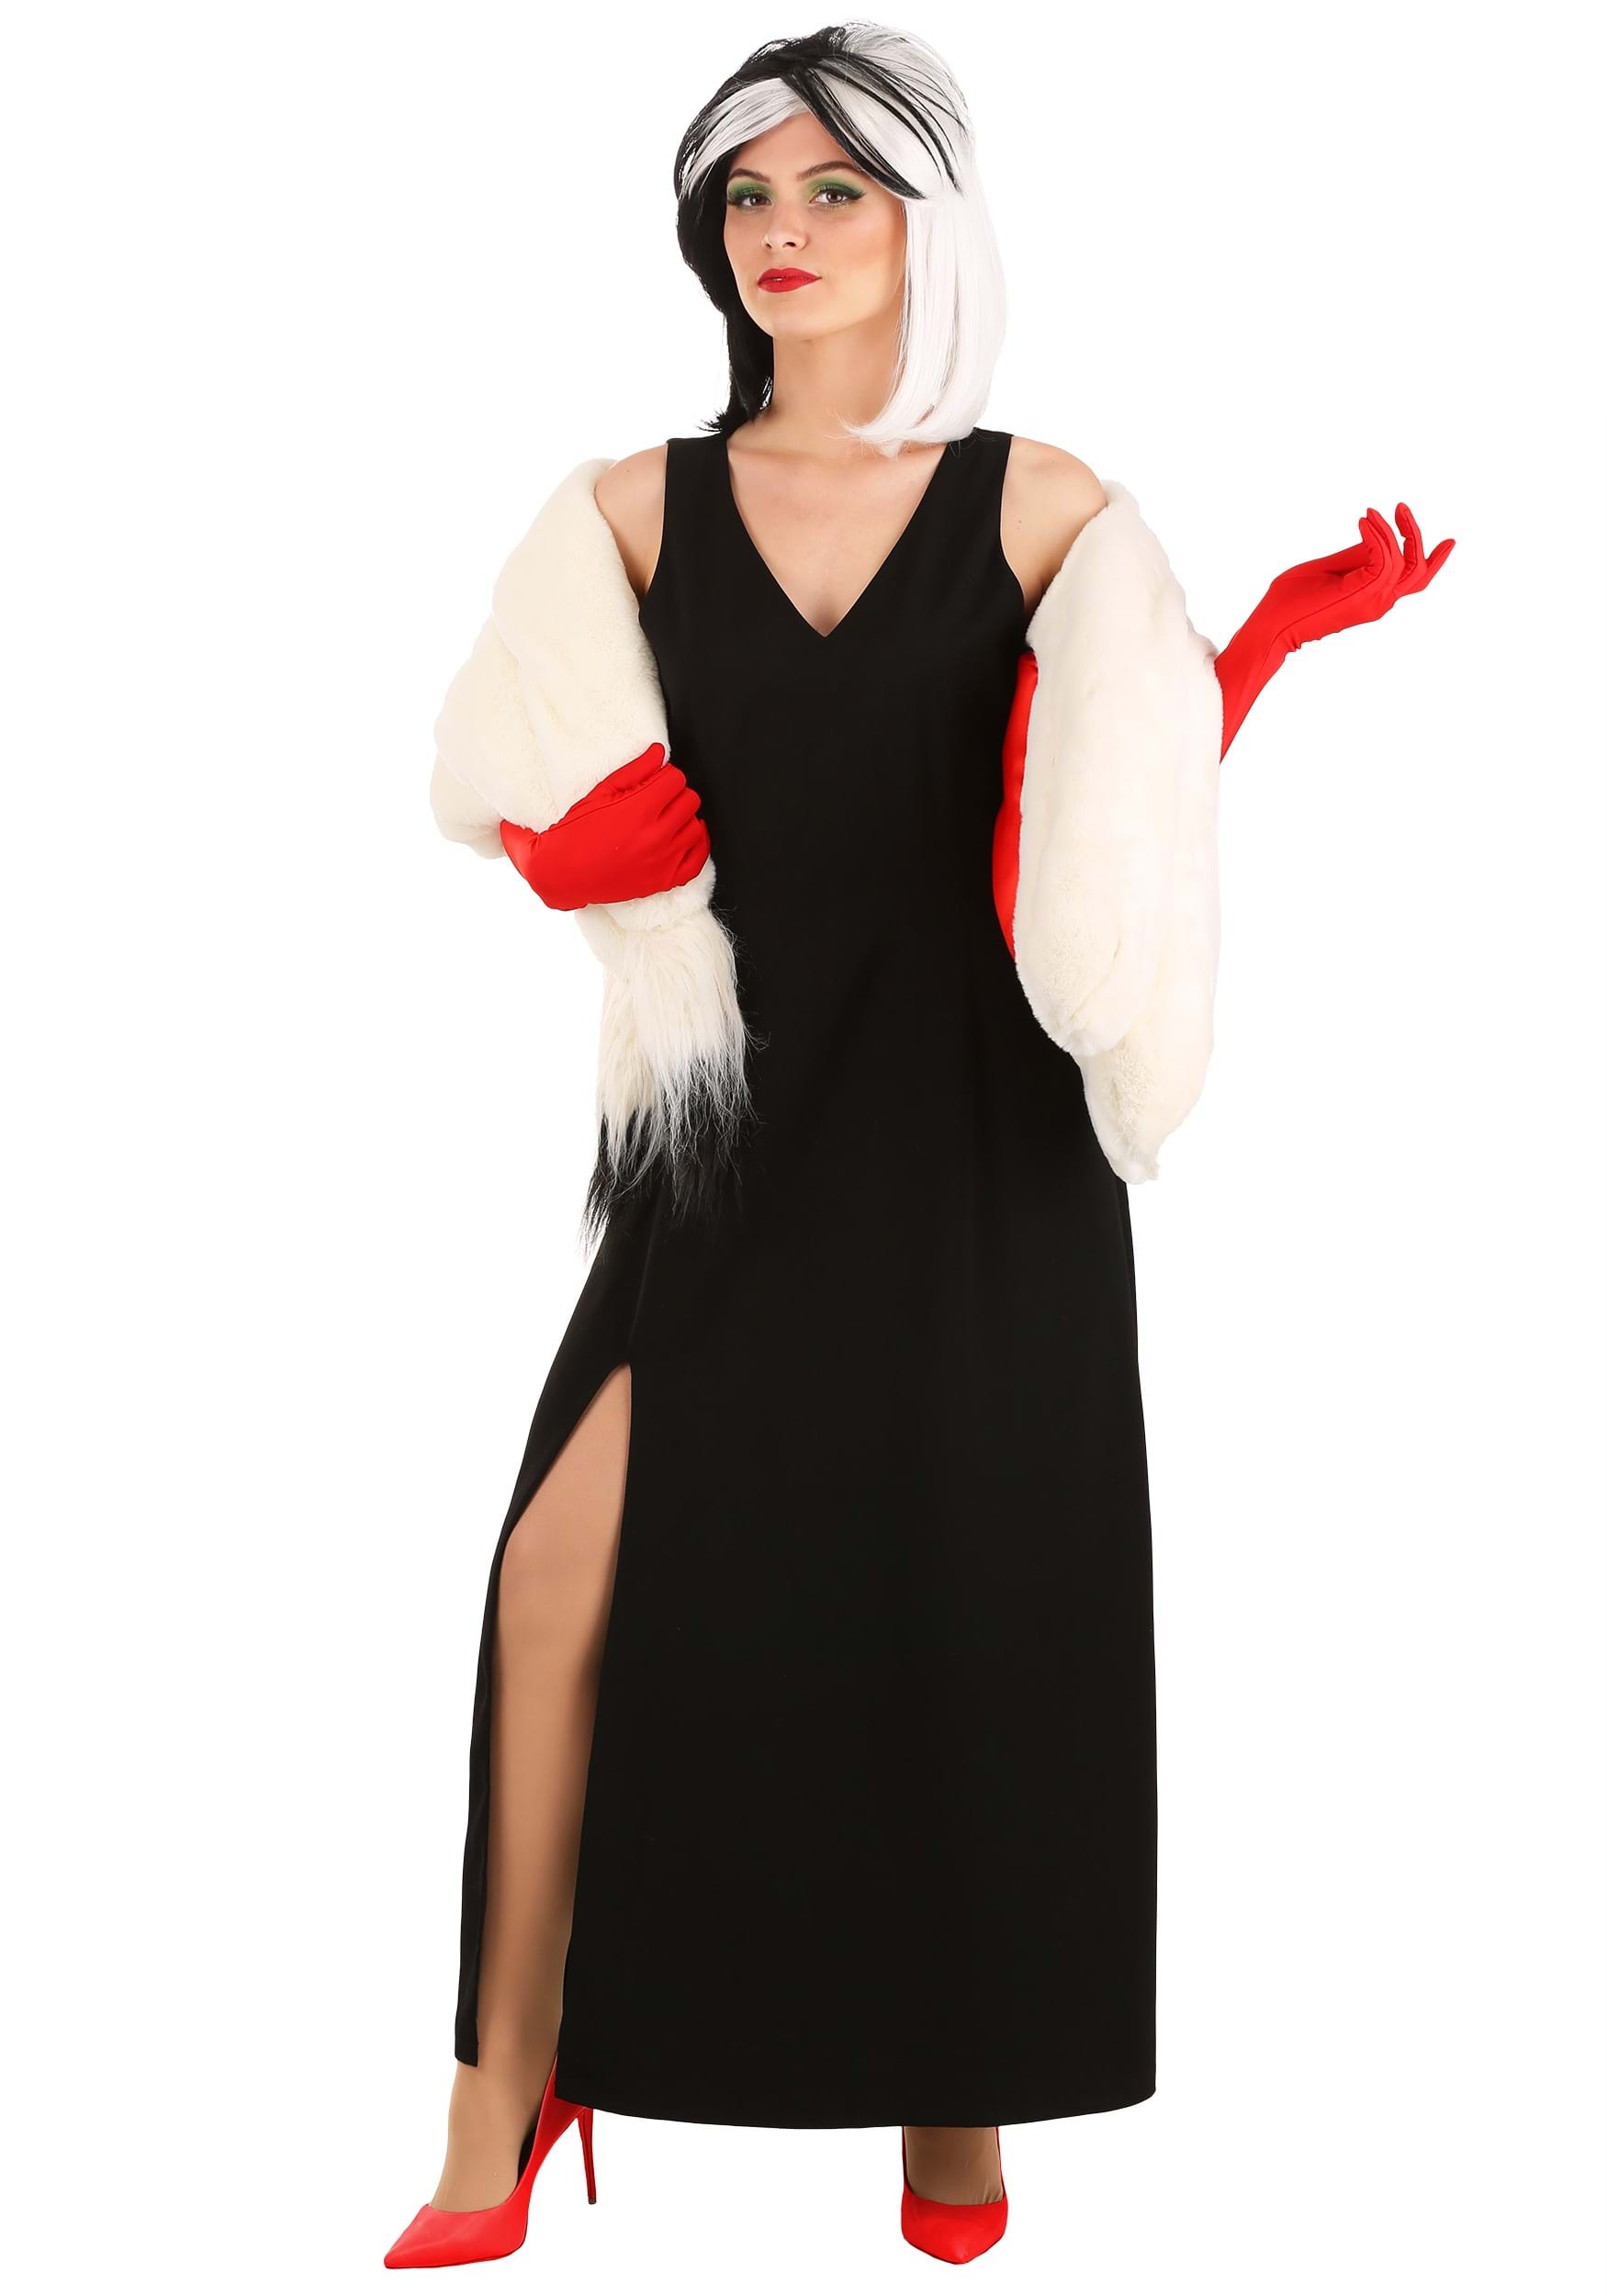 Photos - Fancy Dress FUN Costumes Cruella De Vil Stole Costume for Women Black/Brown/Re